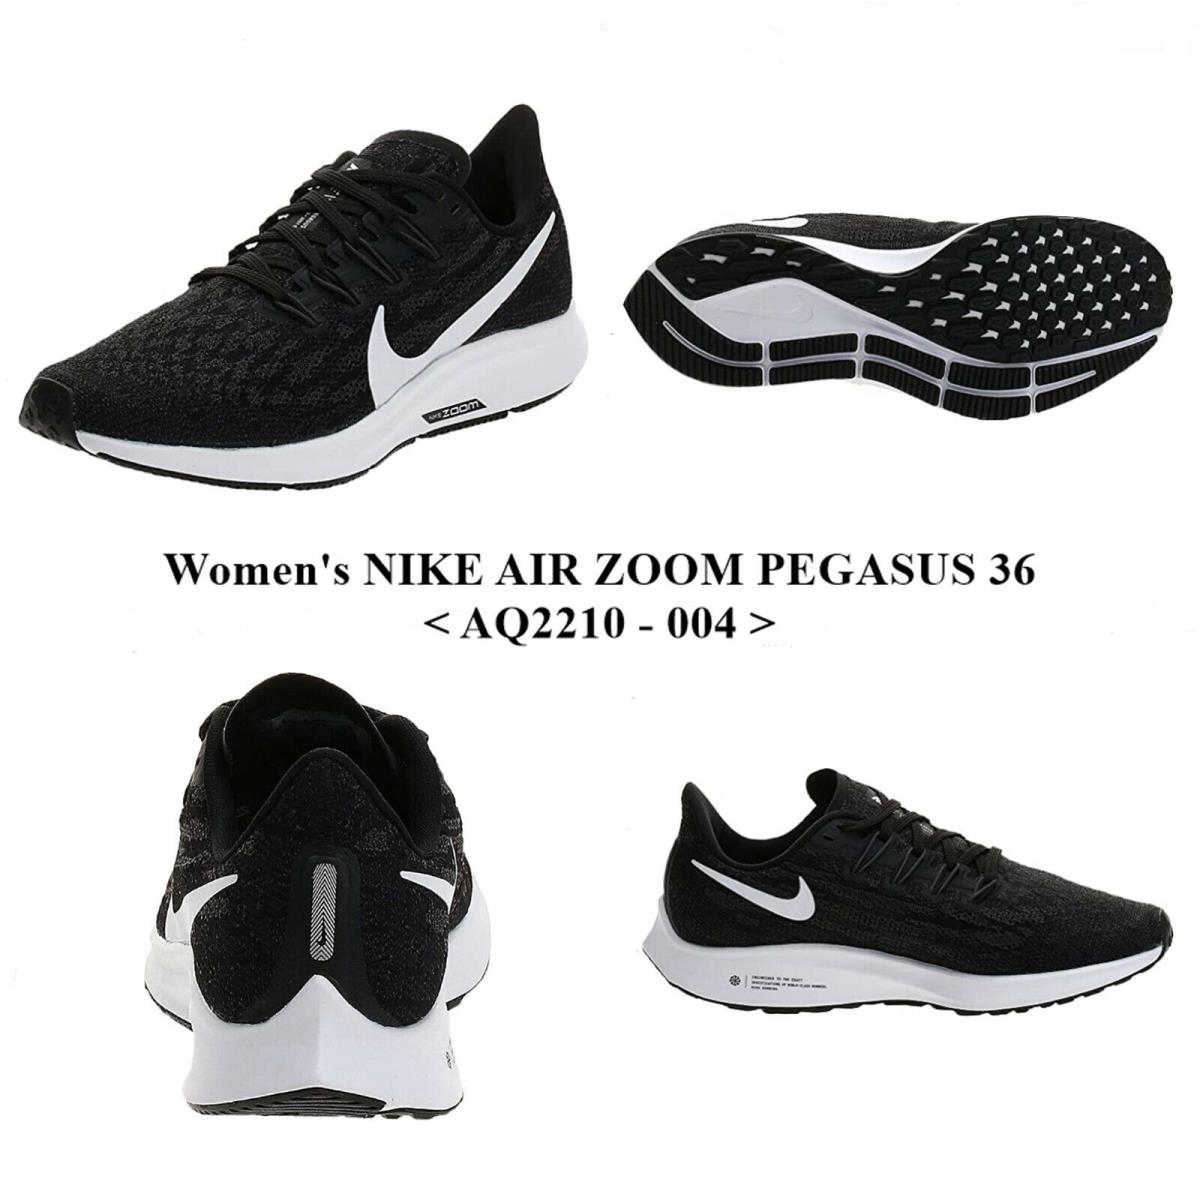 Women`s Nike Air Zoom Pegasus 36 <AQ2210 - 004> Running/casual Shoe.new with Box